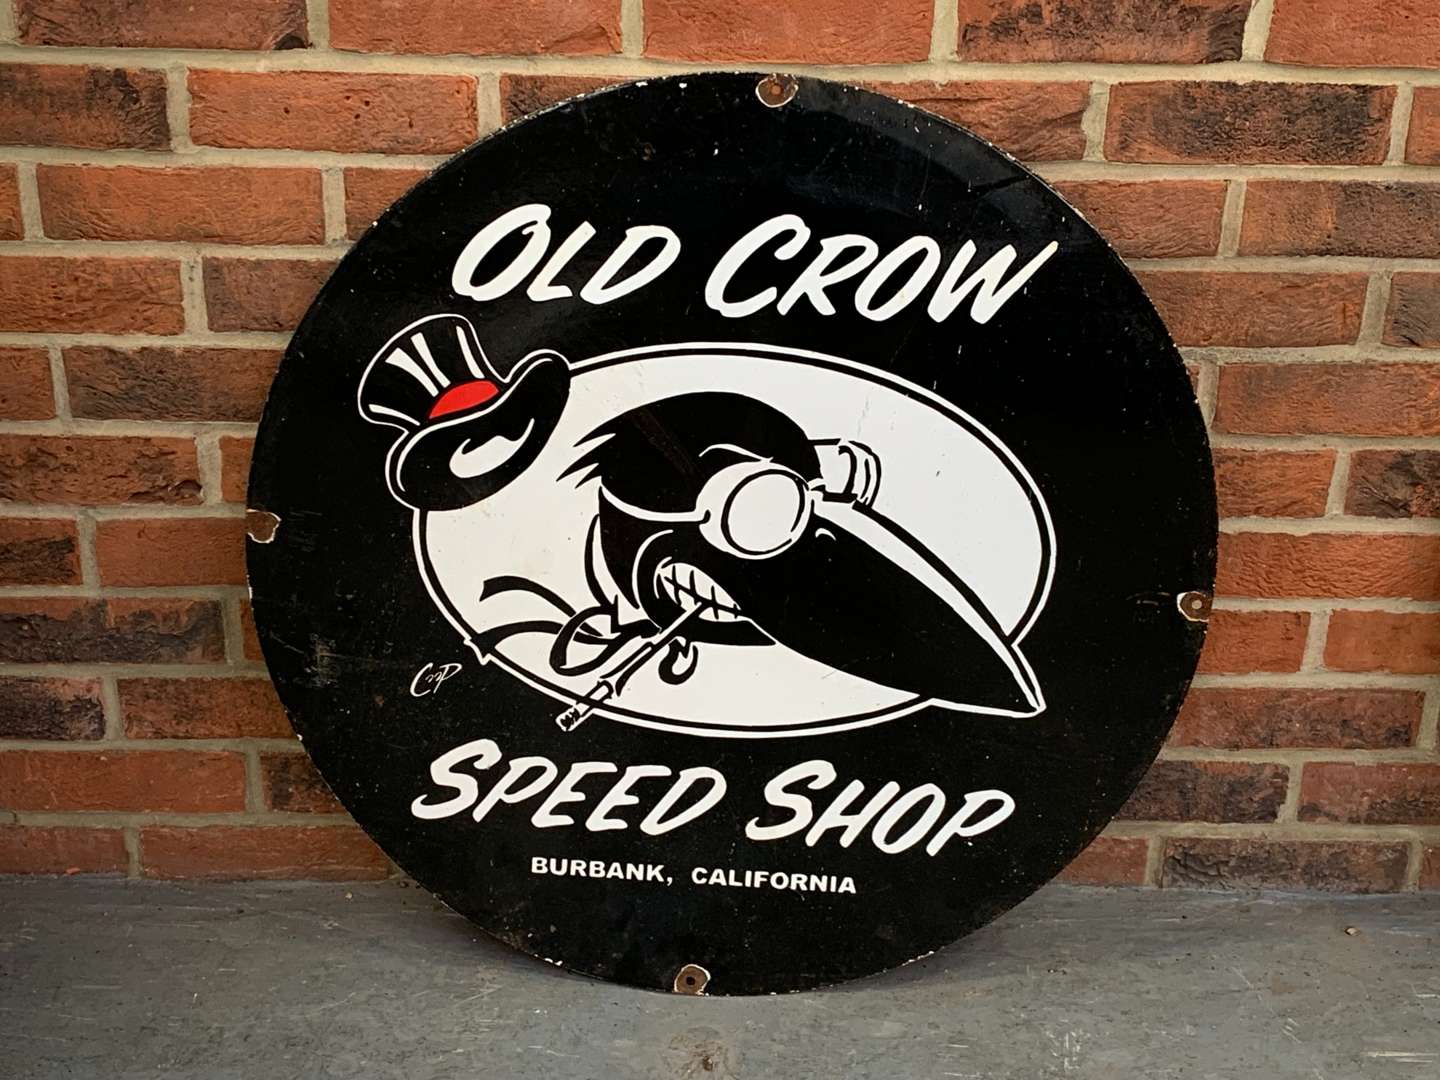 <p>Old Crow Speed Shop Enamel Sign</p>